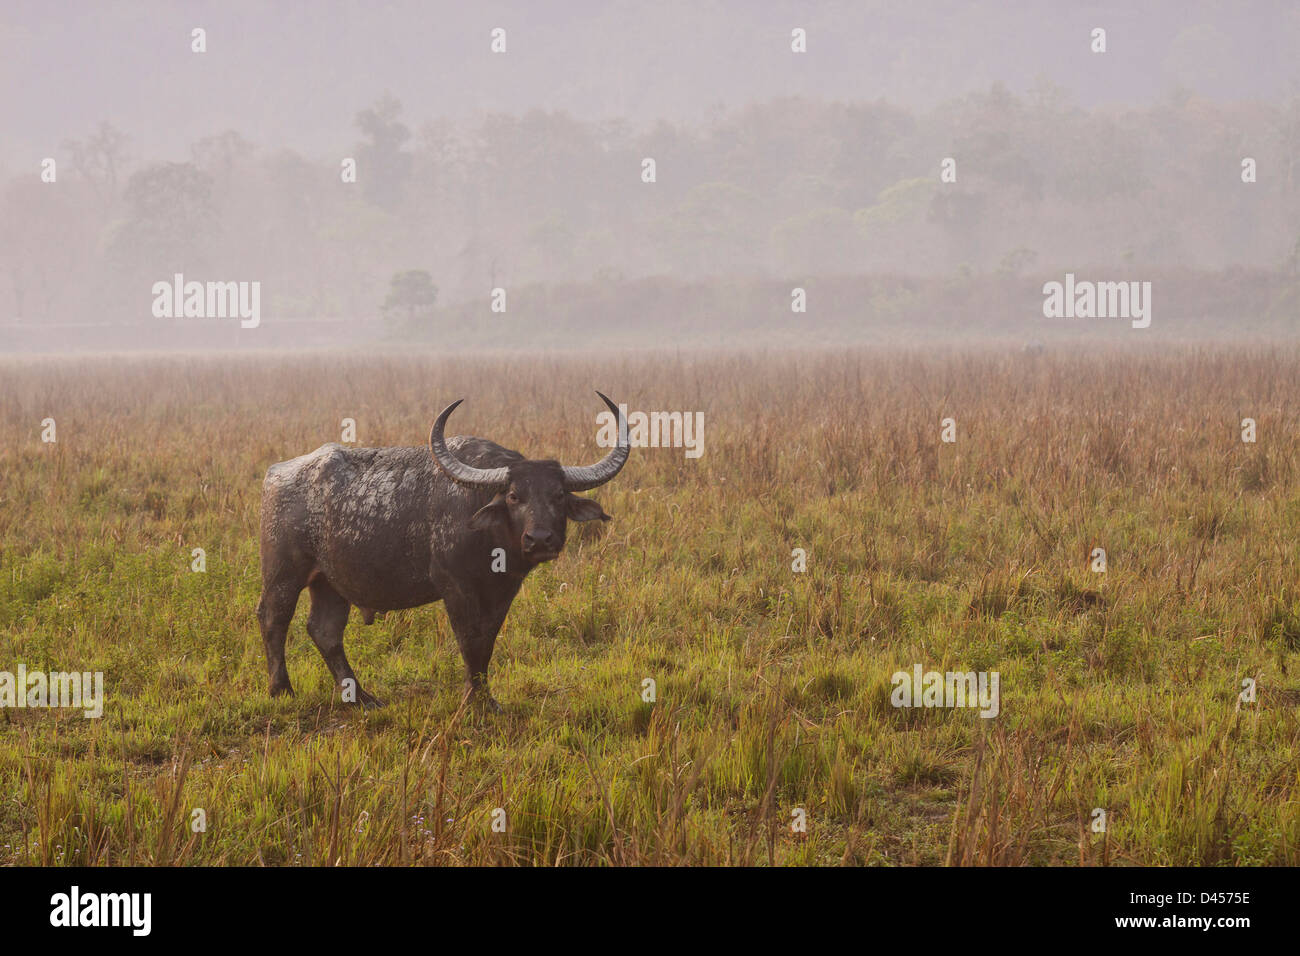 Wild Buffalo in the open grassland. Stock Photo